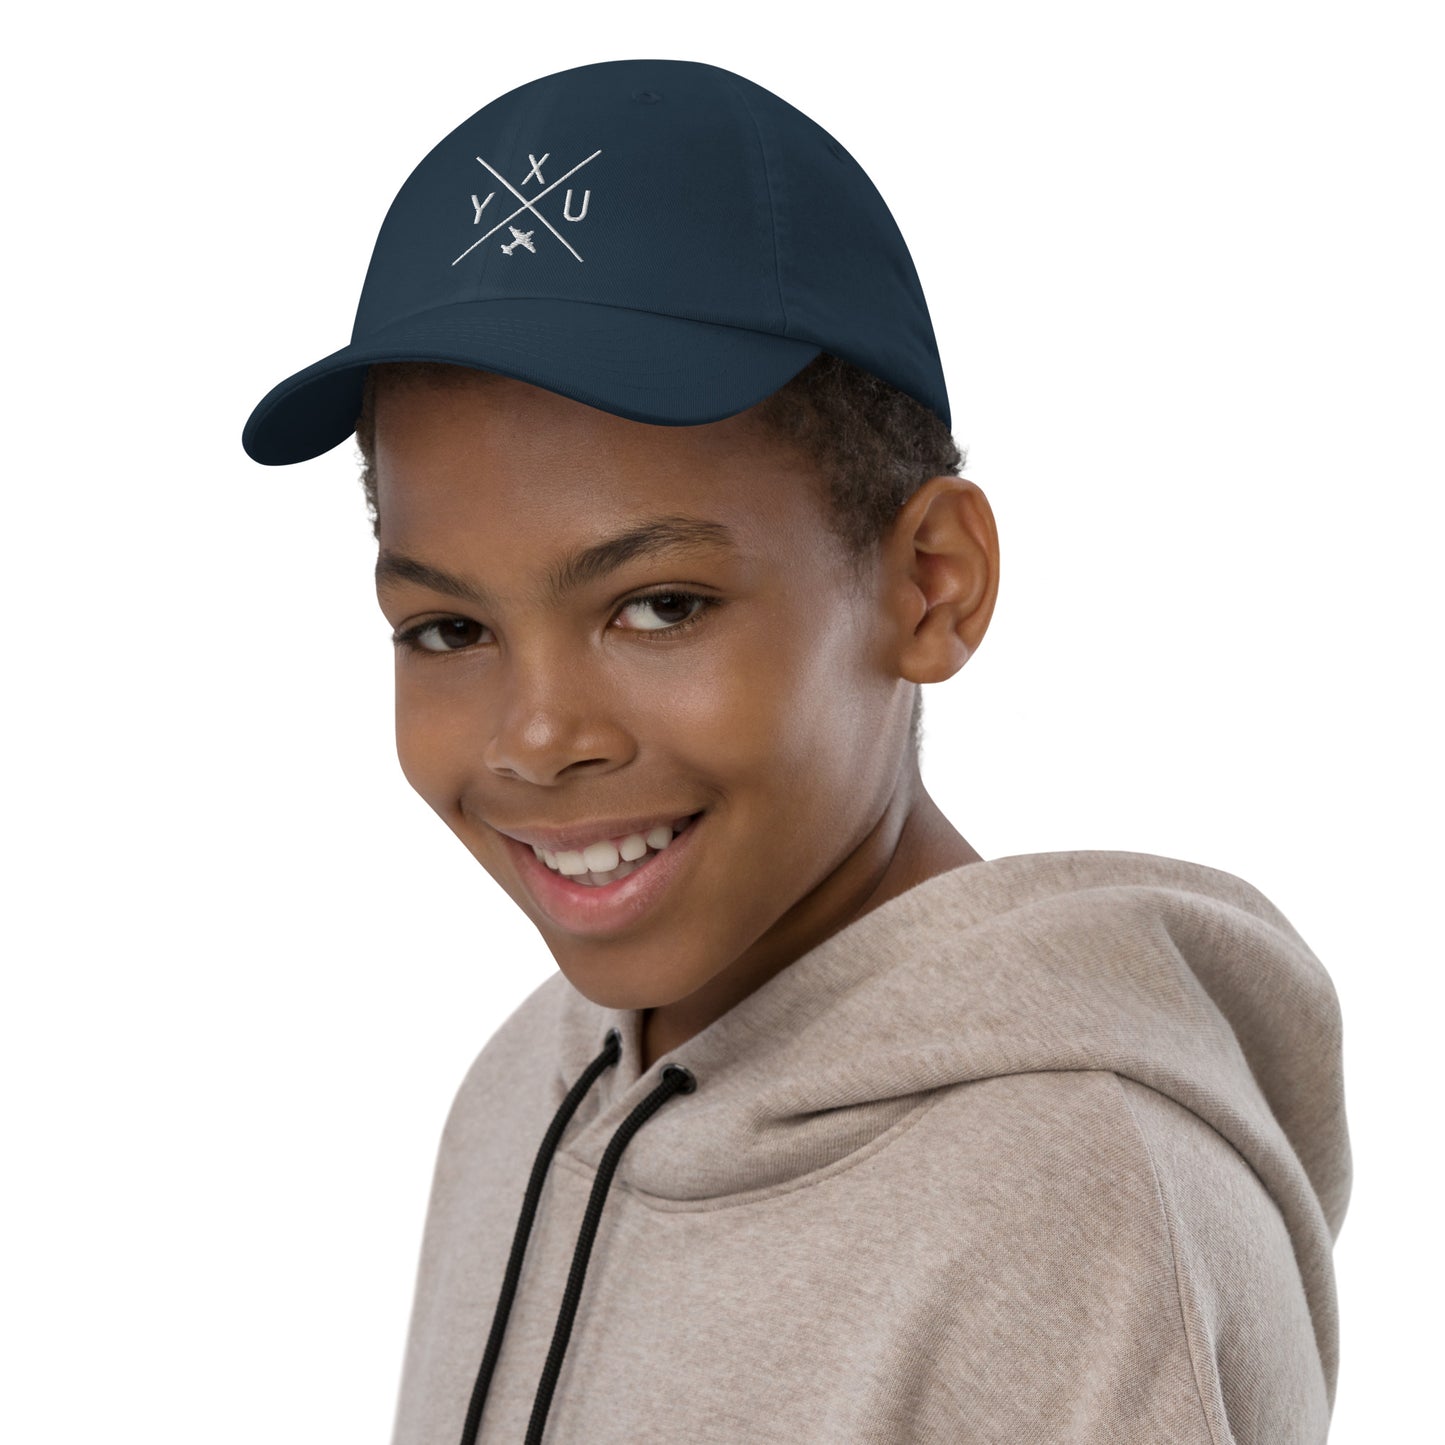 Crossed-X Kid's Baseball Cap - White • YXU London • YHM Designs - Image 03